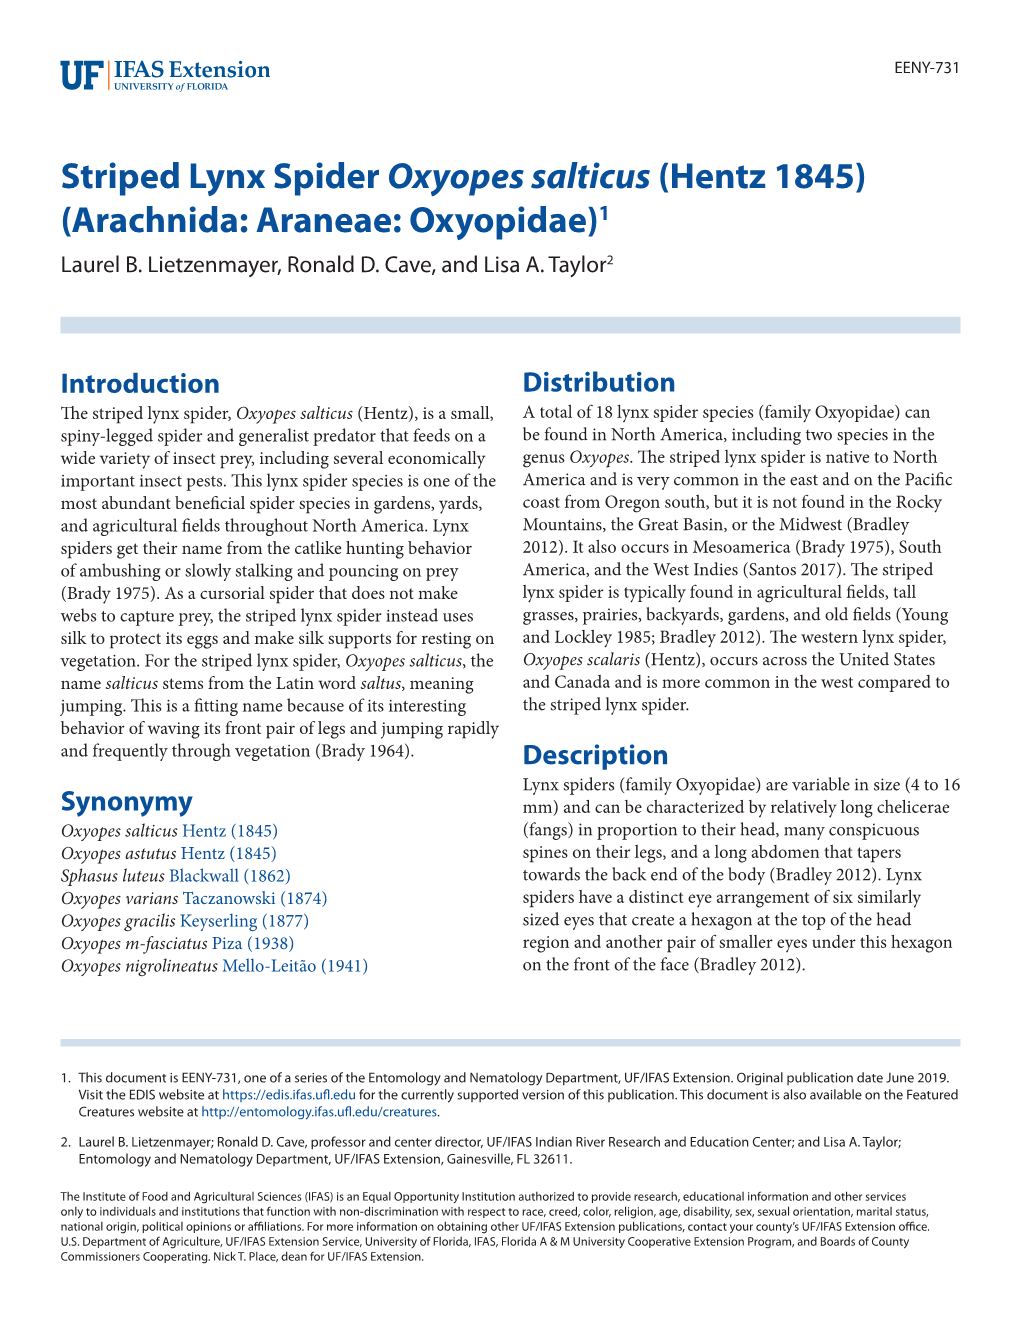 Striped Lynx Spider Oxyopes Salticus (Hentz 1845) (Arachnida: Araneae: Oxyopidae)1 Laurel B